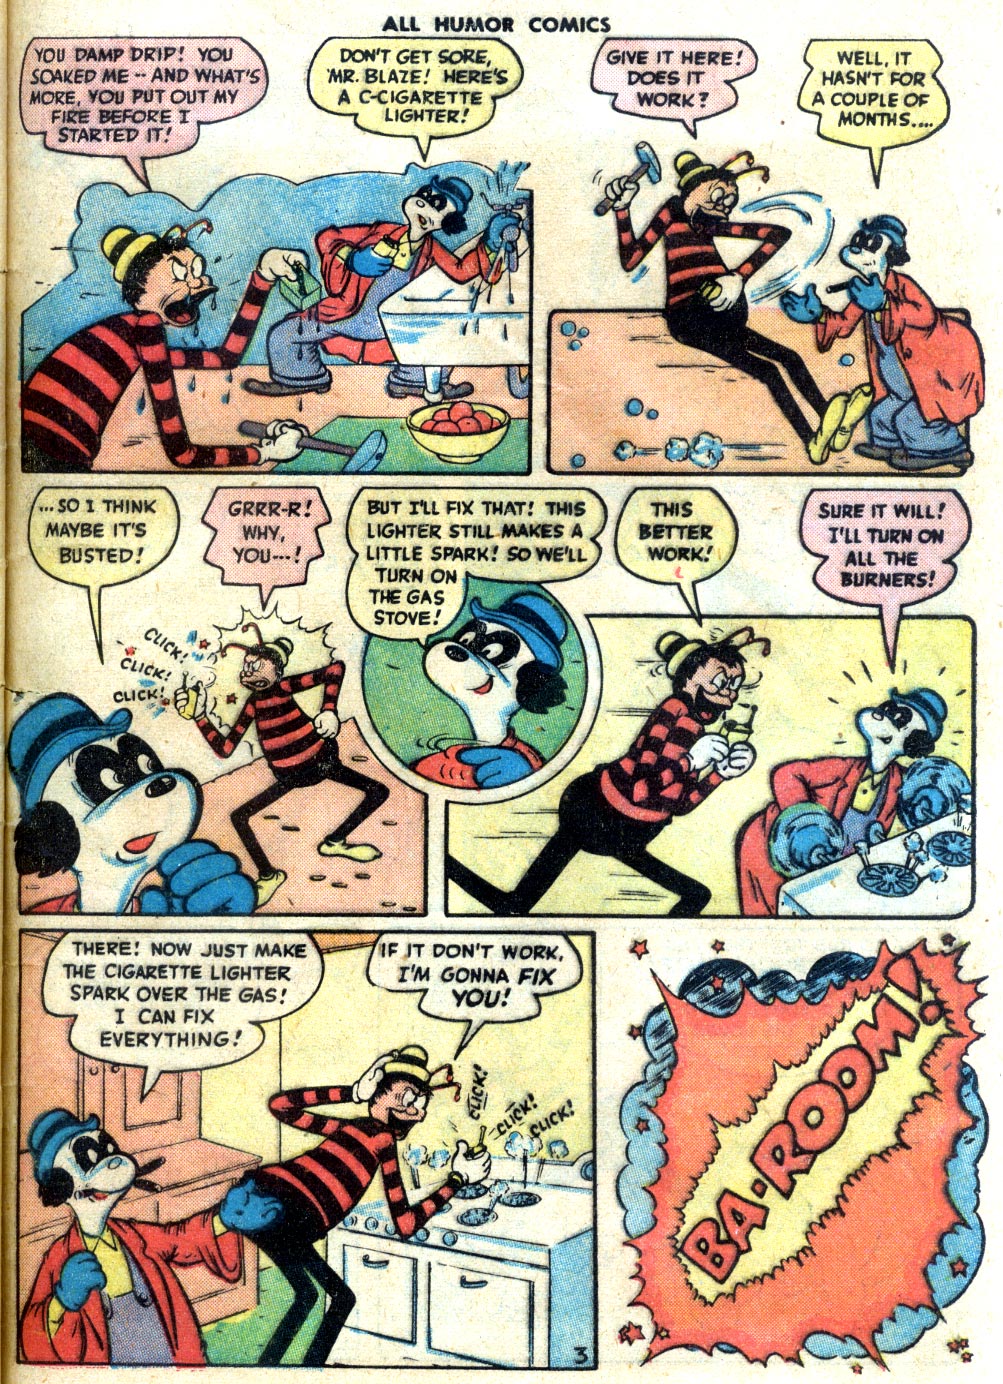 All-Humor-Comics c (47)